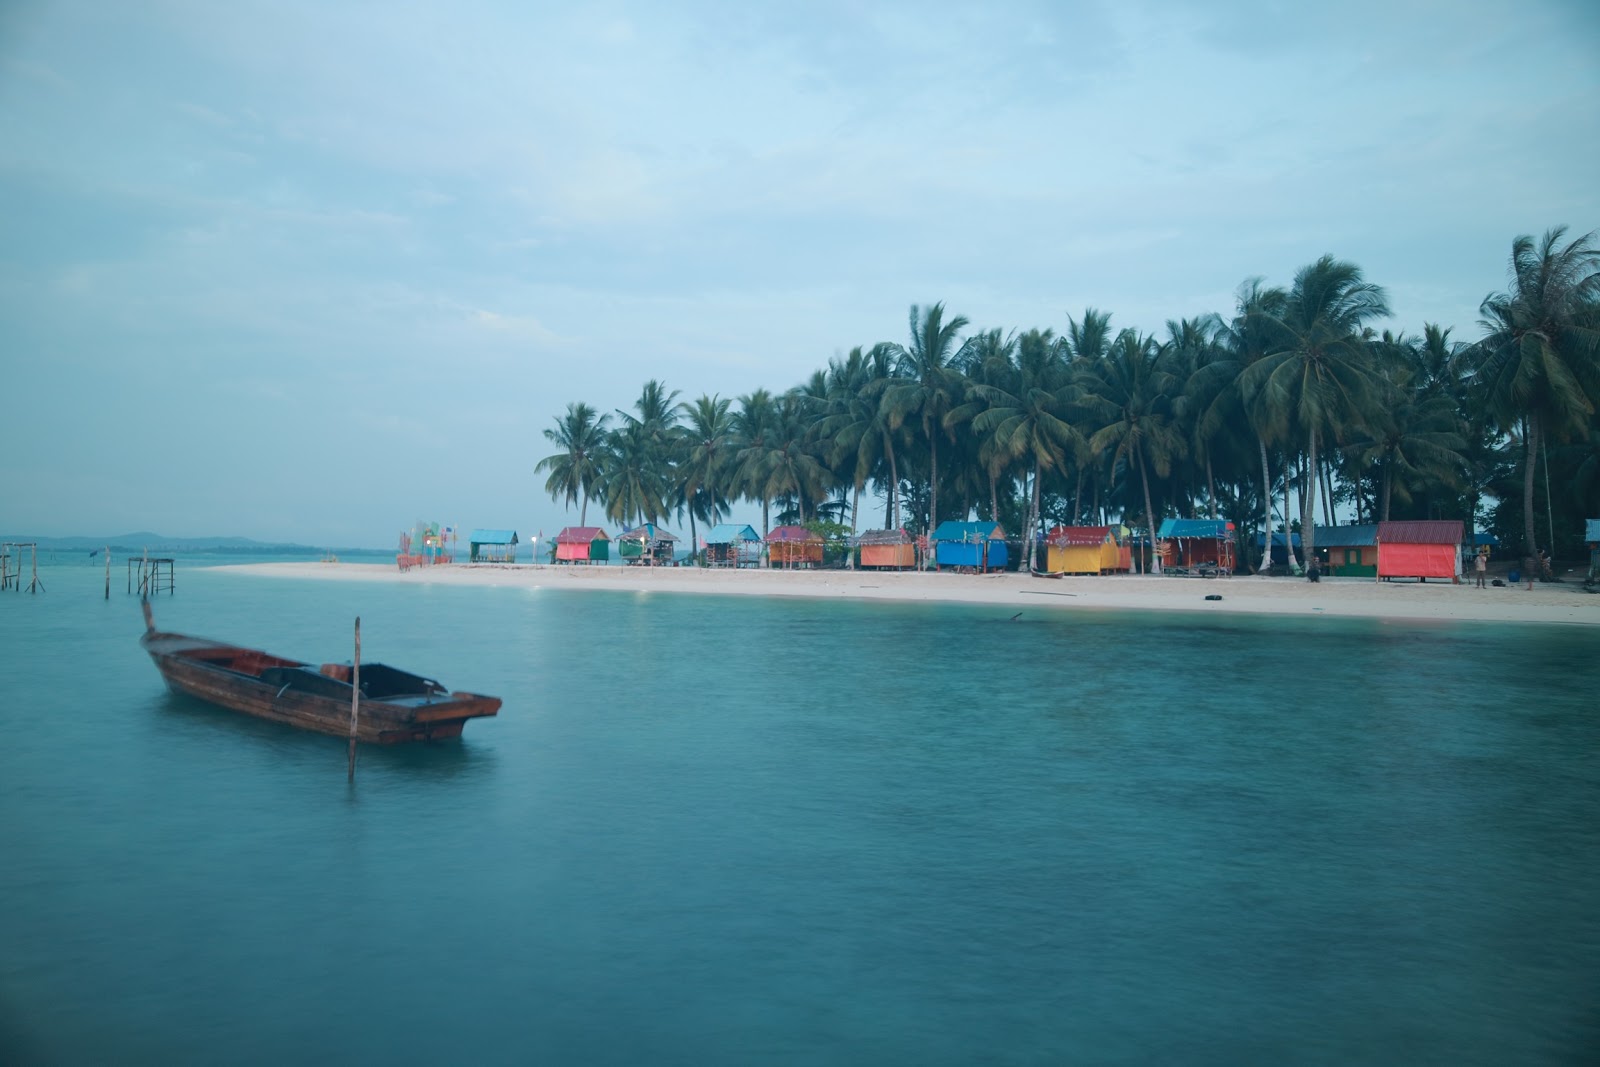 Foto de Wisata Pulau Mubut Darat - lugar popular entre os apreciadores de relaxamento